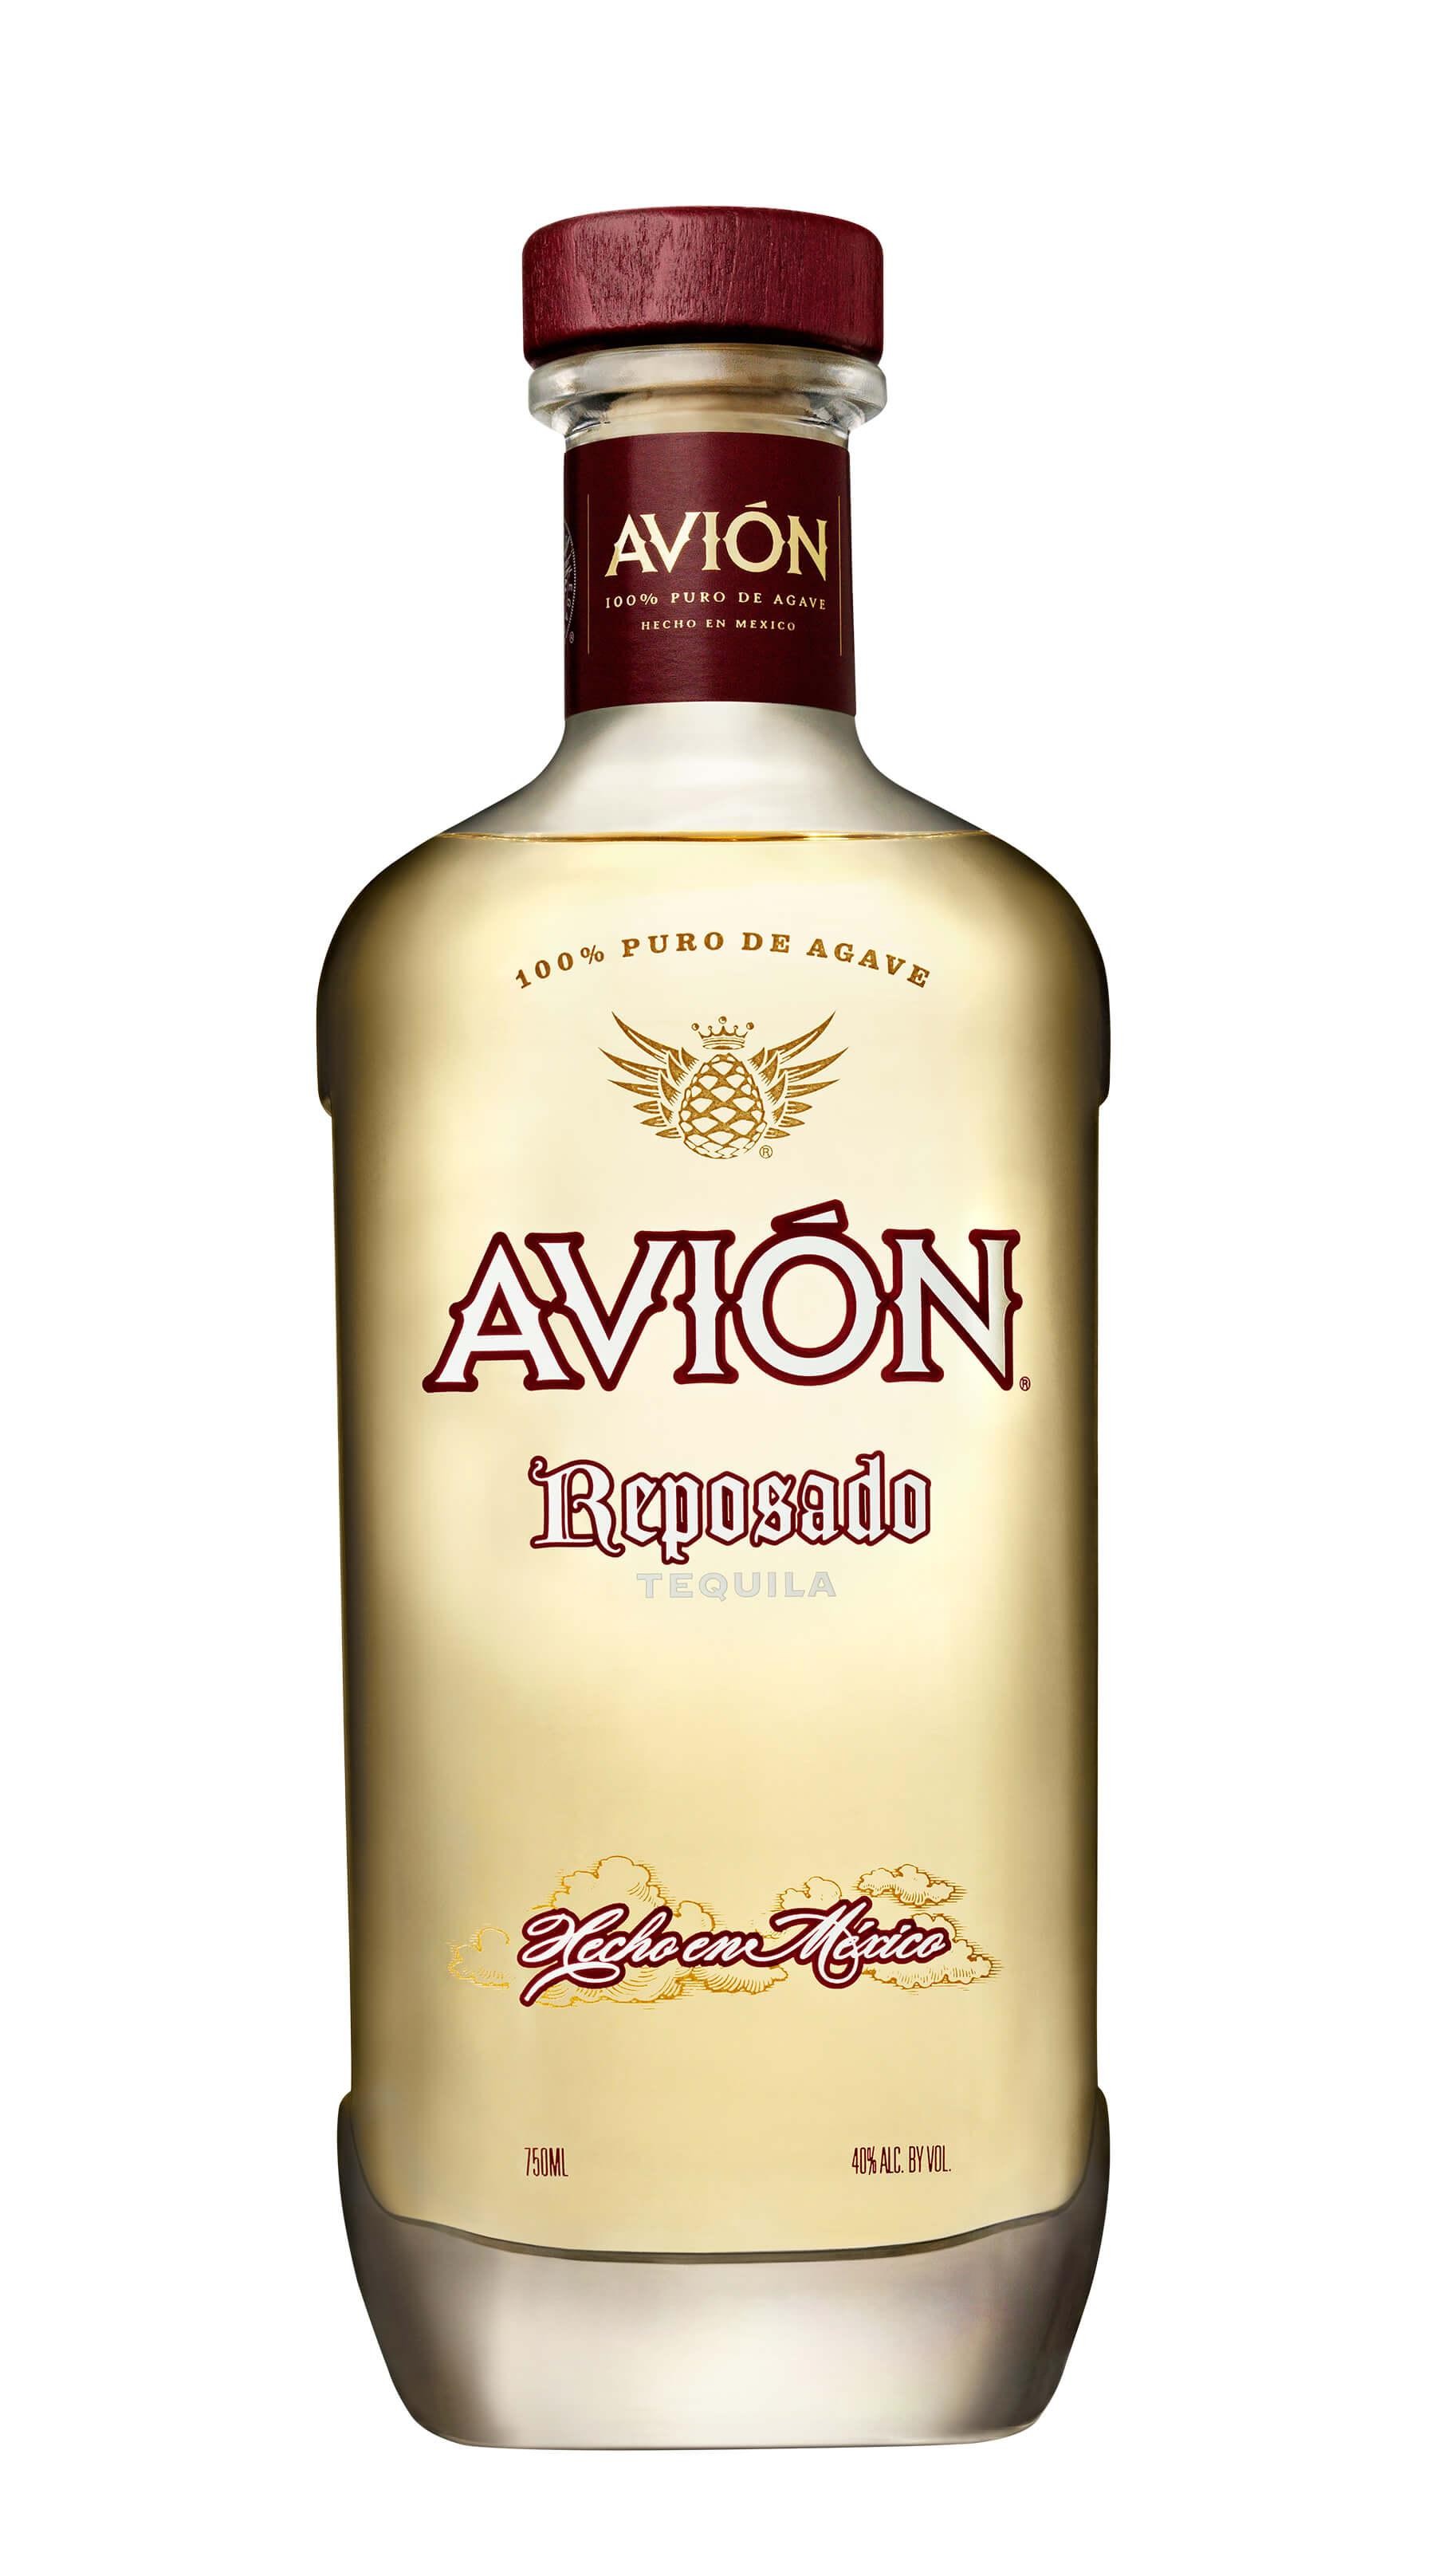 Avion Reposado Single Origin Small Batch Highlands Agave Tequila Tequila